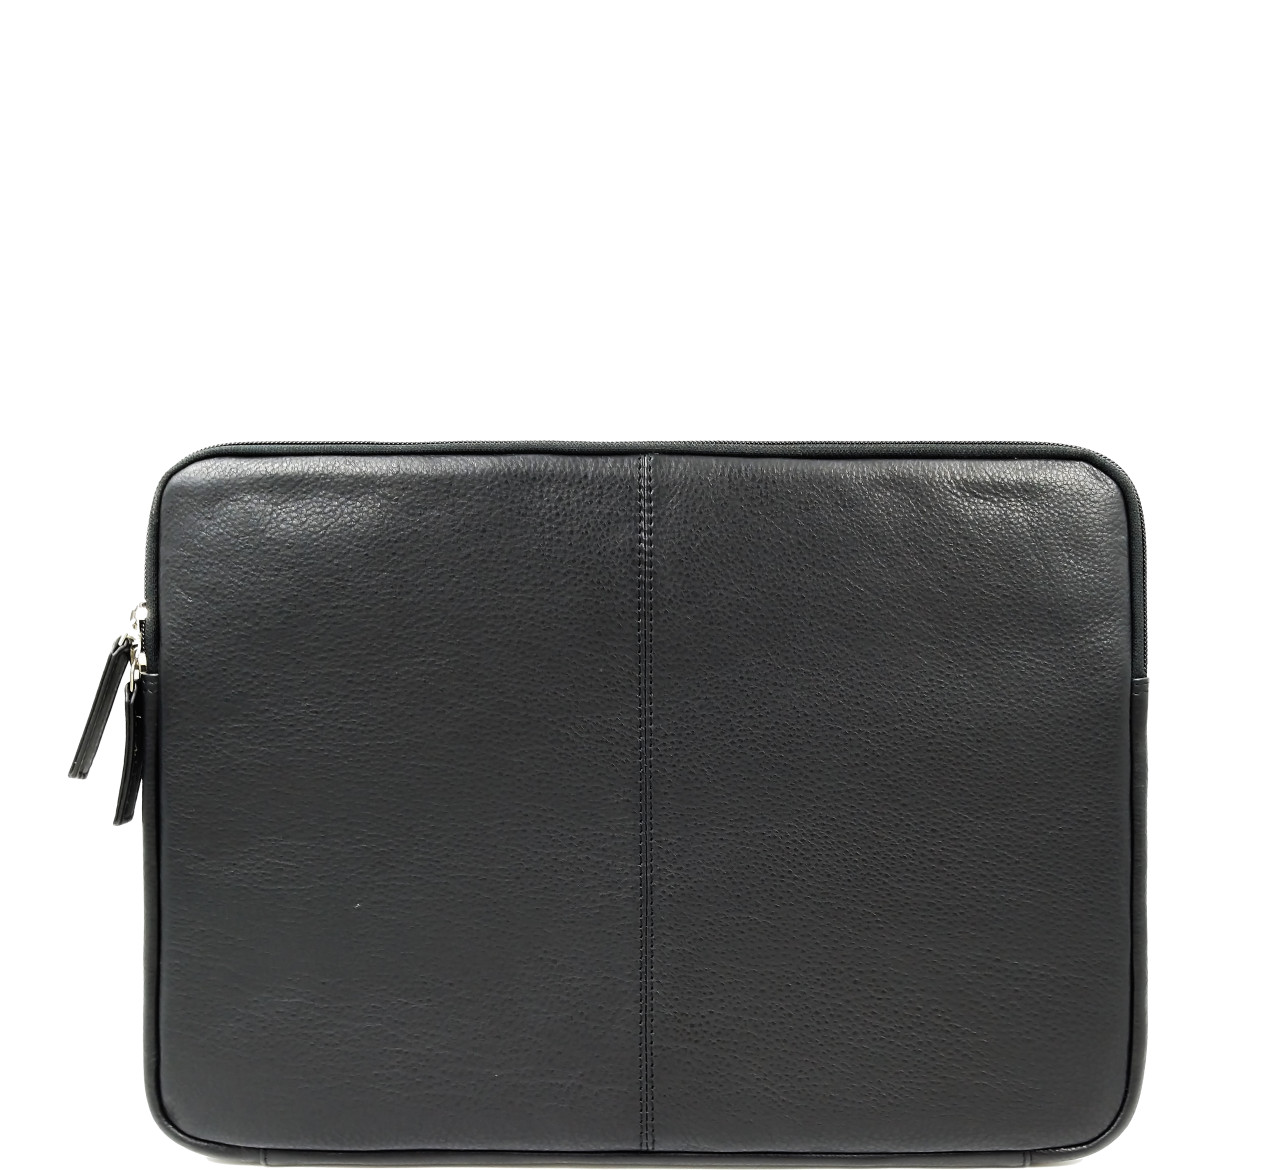 Ashlin Designer Eden 13 Inch Macbook Zippered Sleek Case